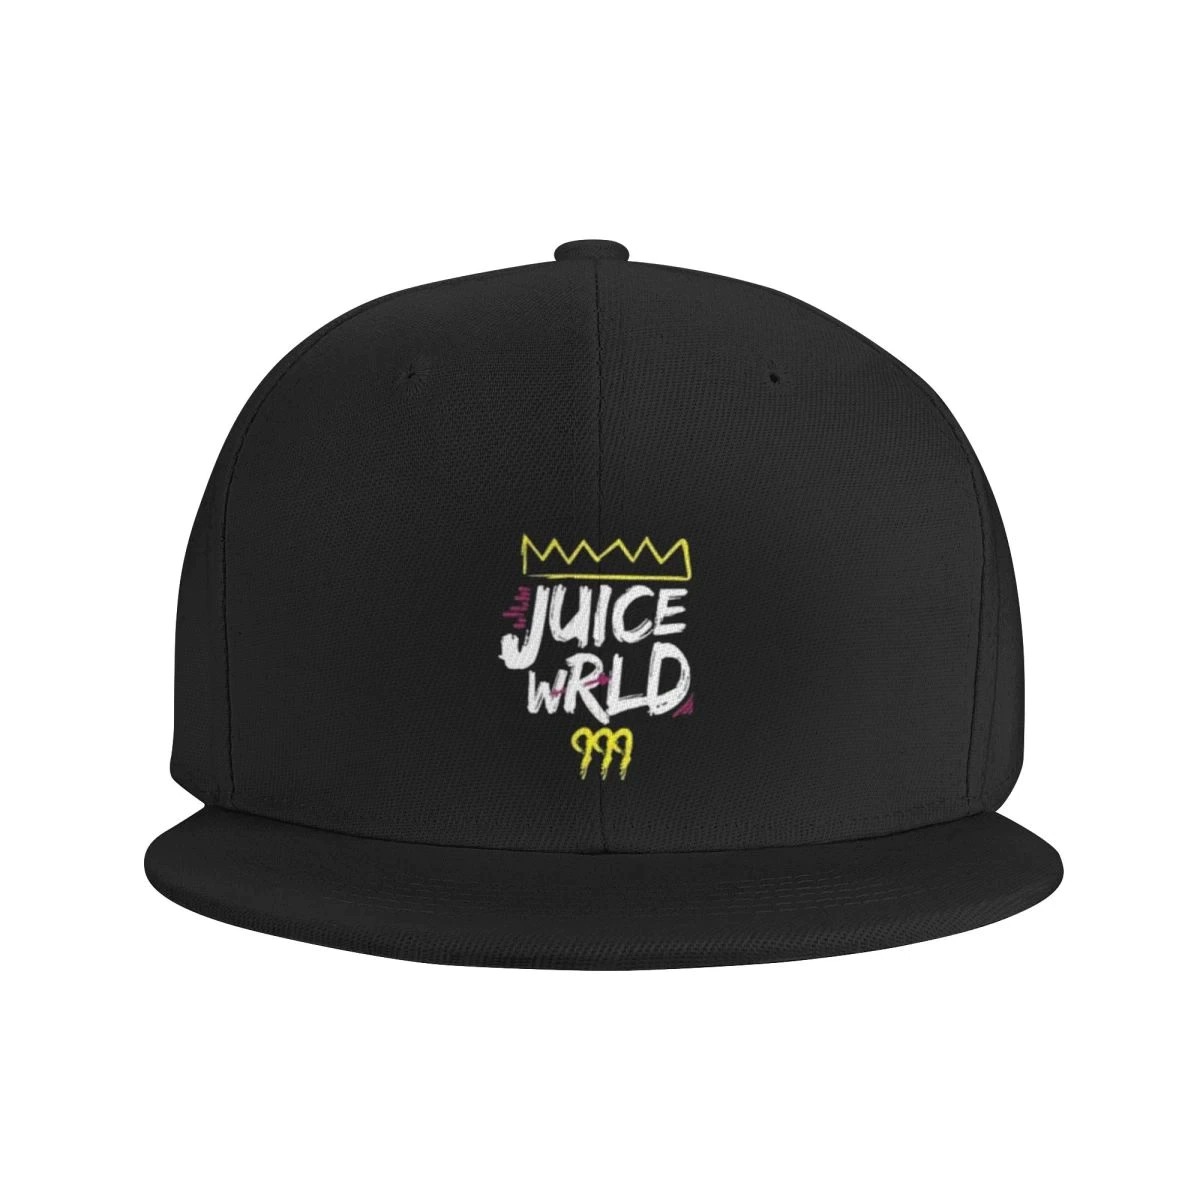 Juice Wrld 999 Merch Cap Hip Hop 8 - Juice Wrld Store